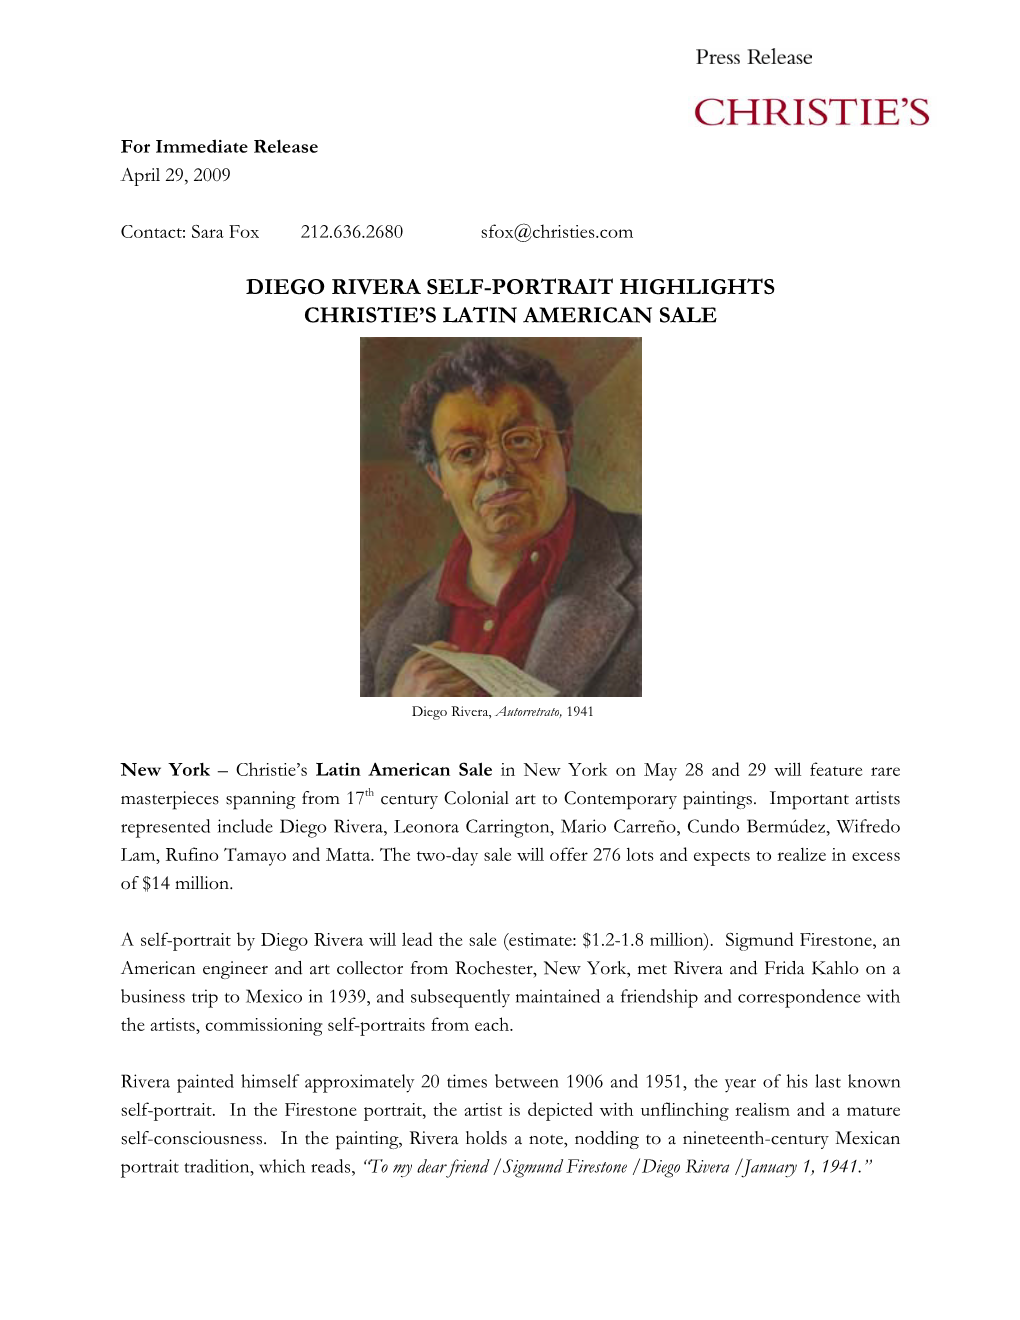 Diego Rivera Self-Portrait Highlights Christie's Latin American Sale